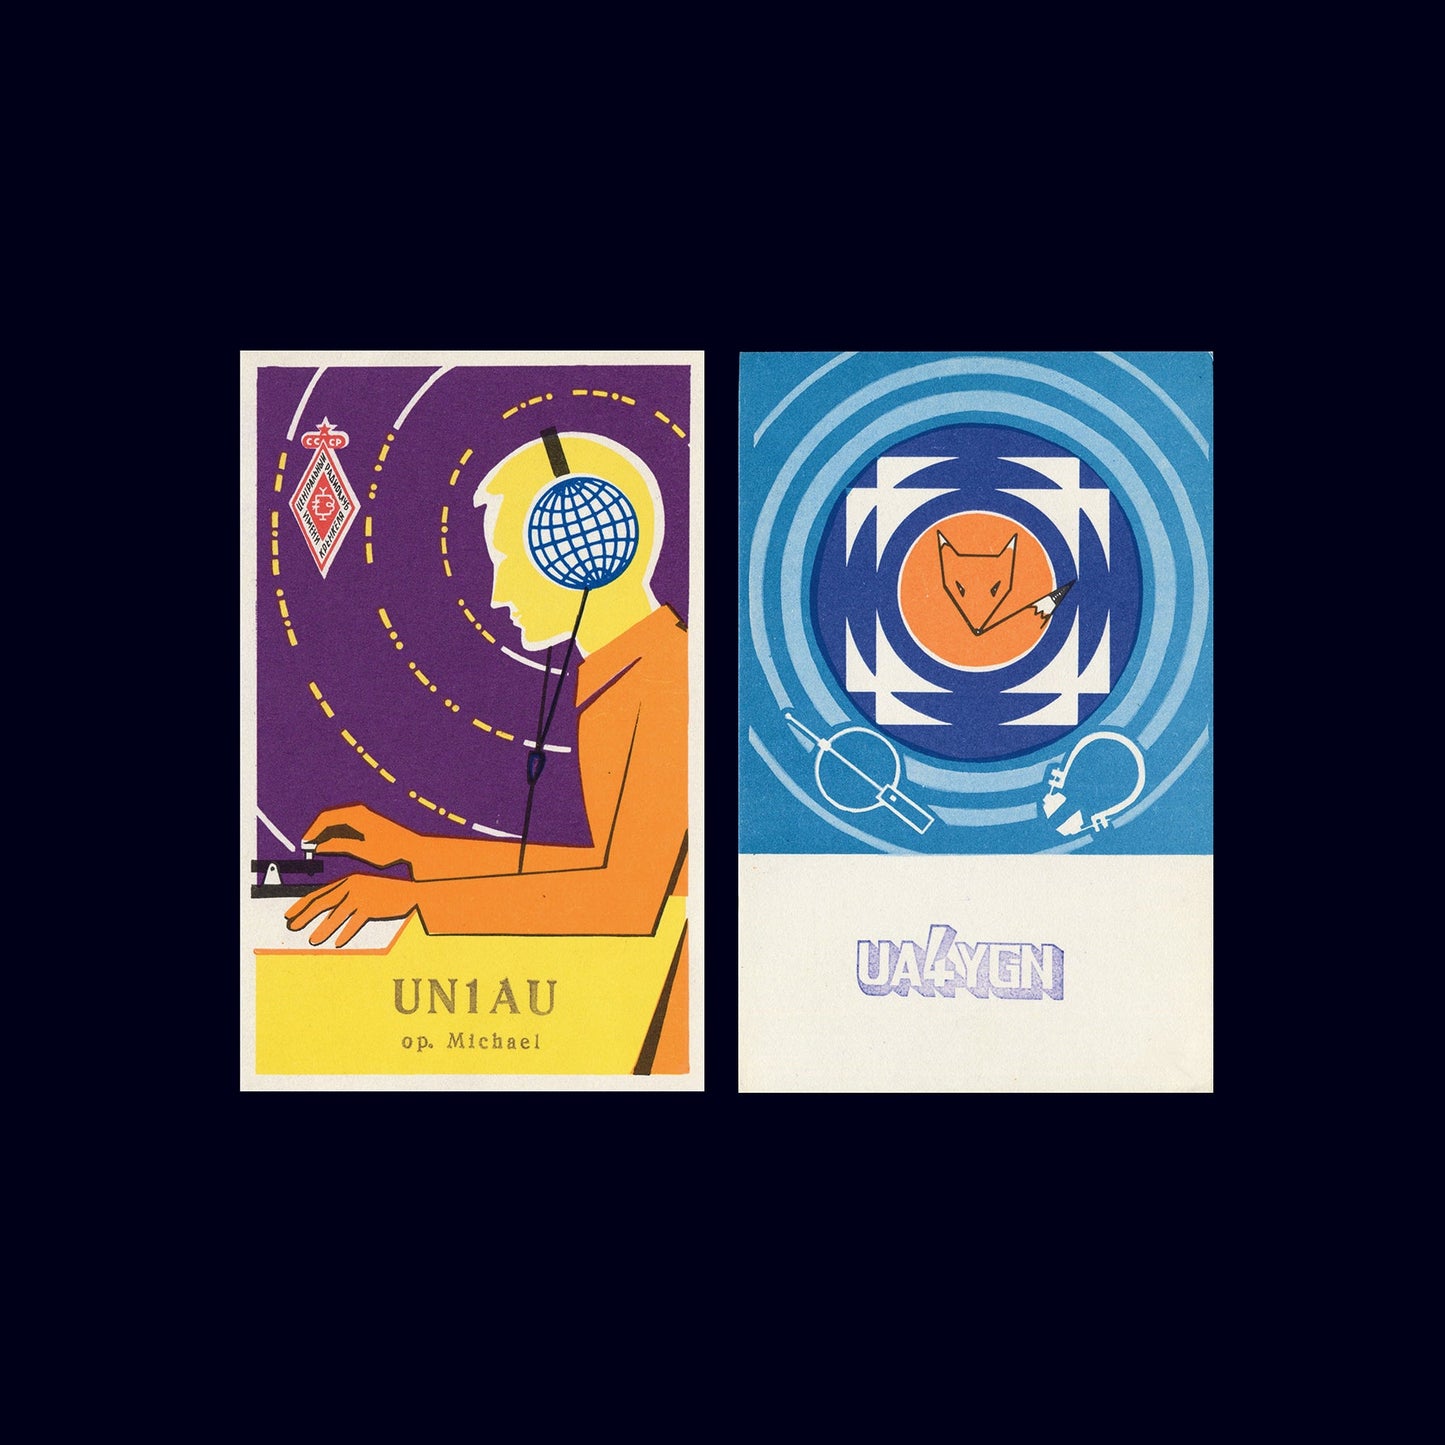 Book - QSL Radio Cards